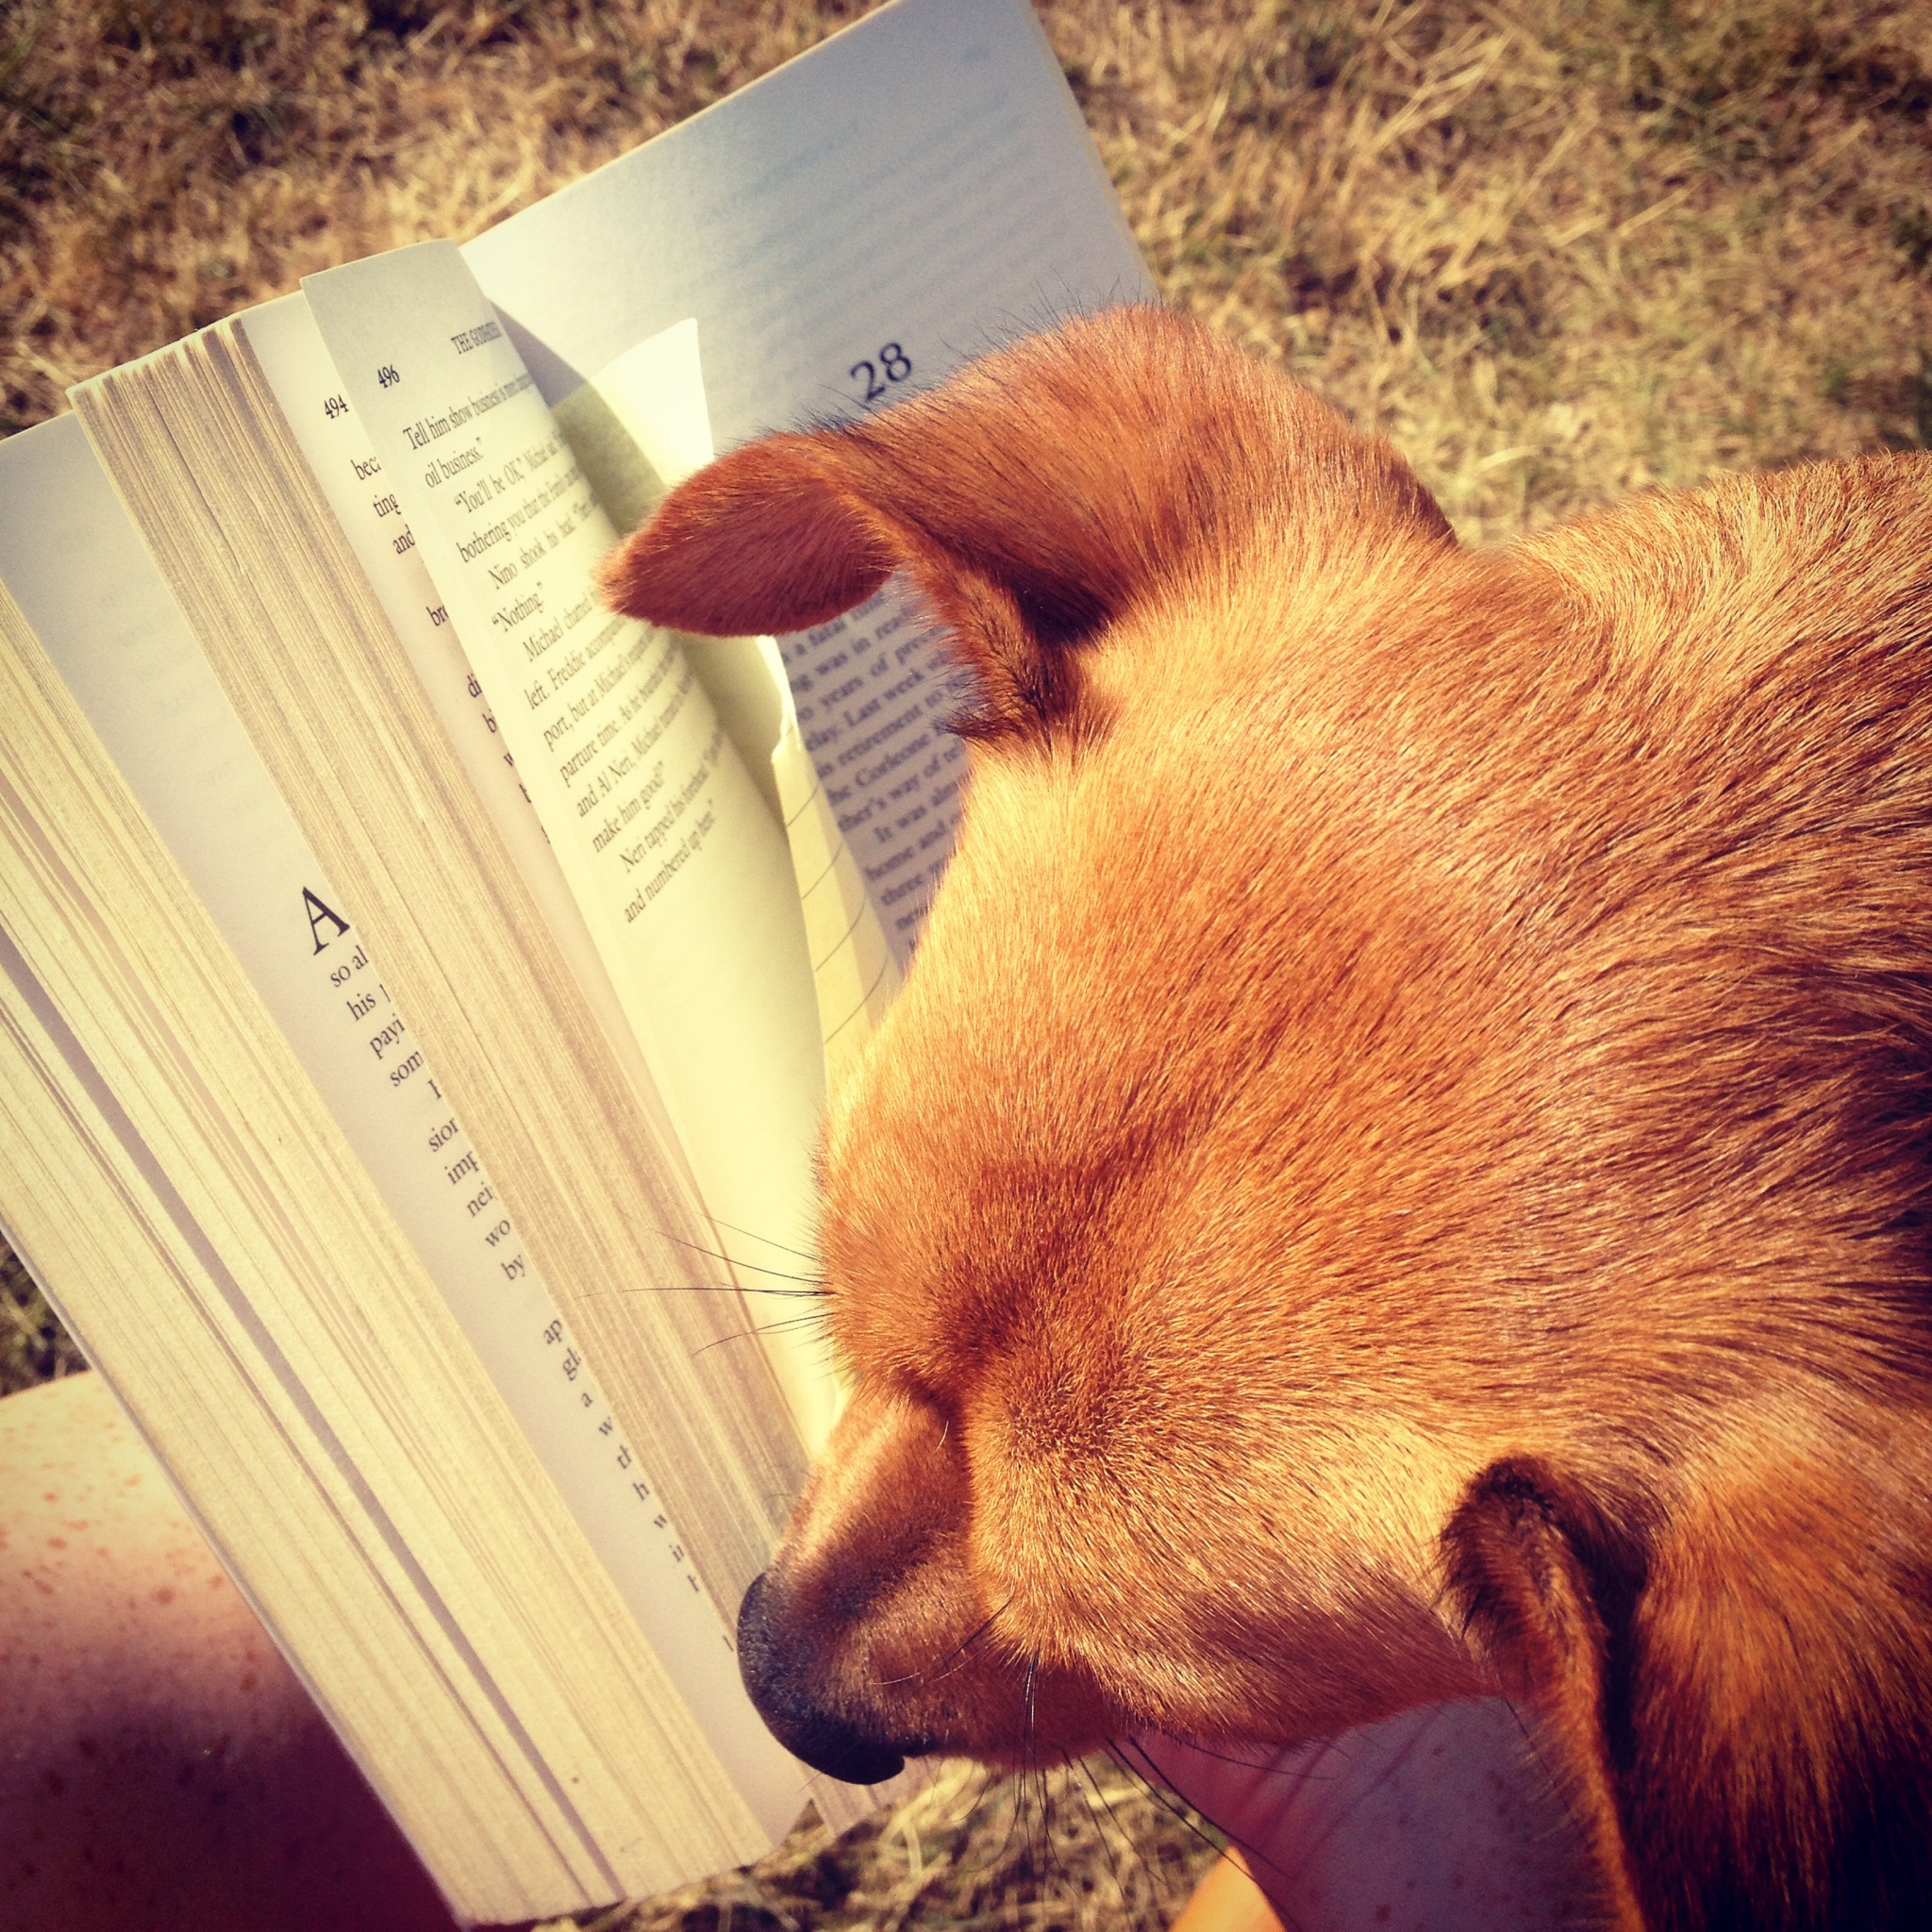 Dog Ate My Book